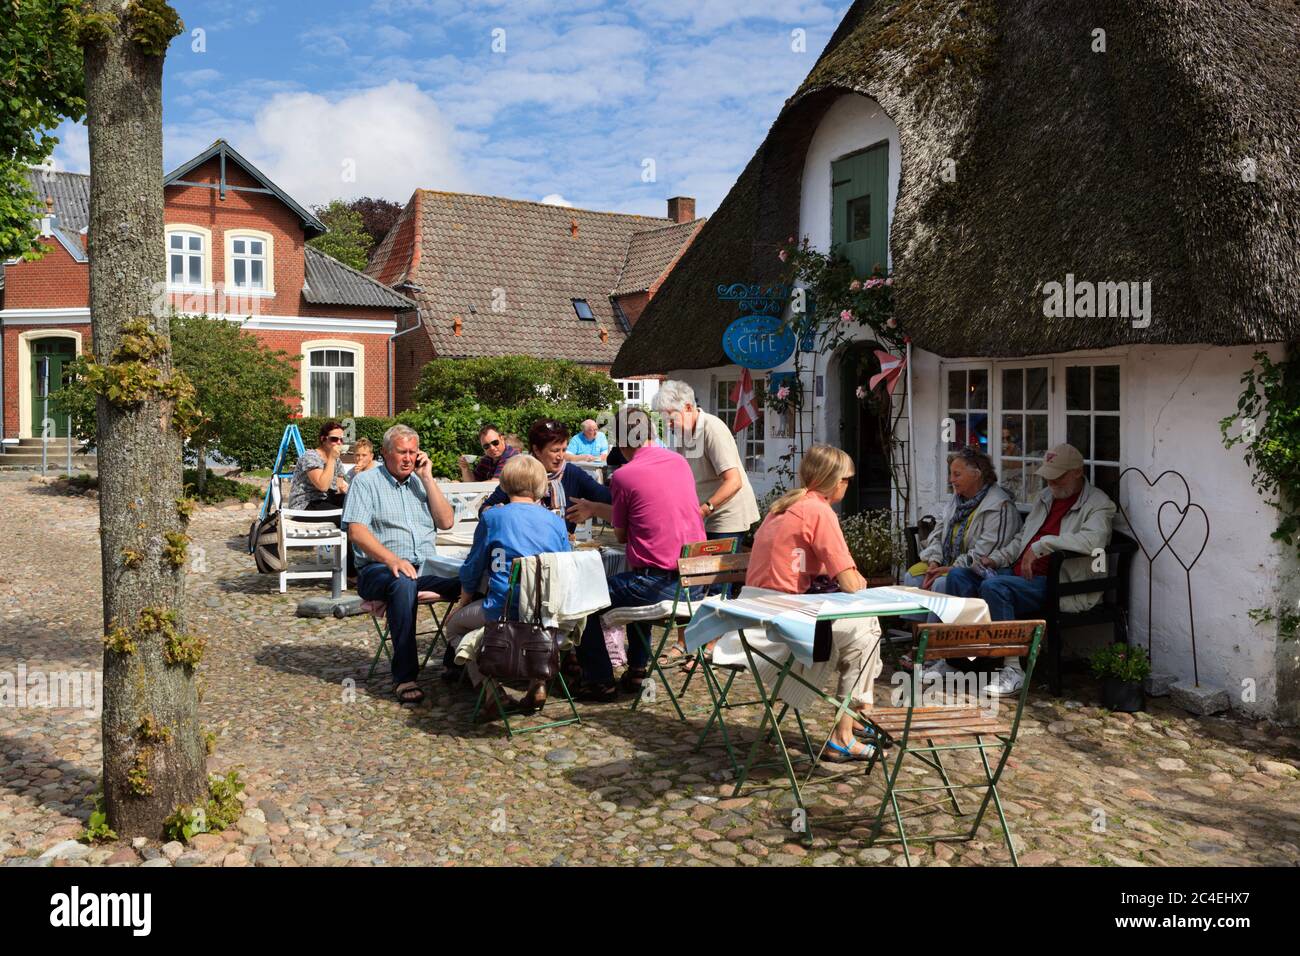 Mormor's Lille café (Grandma's little café) along Slotsgade, Mogeltonder, Jutland, Denmark, Europe Stock Photo